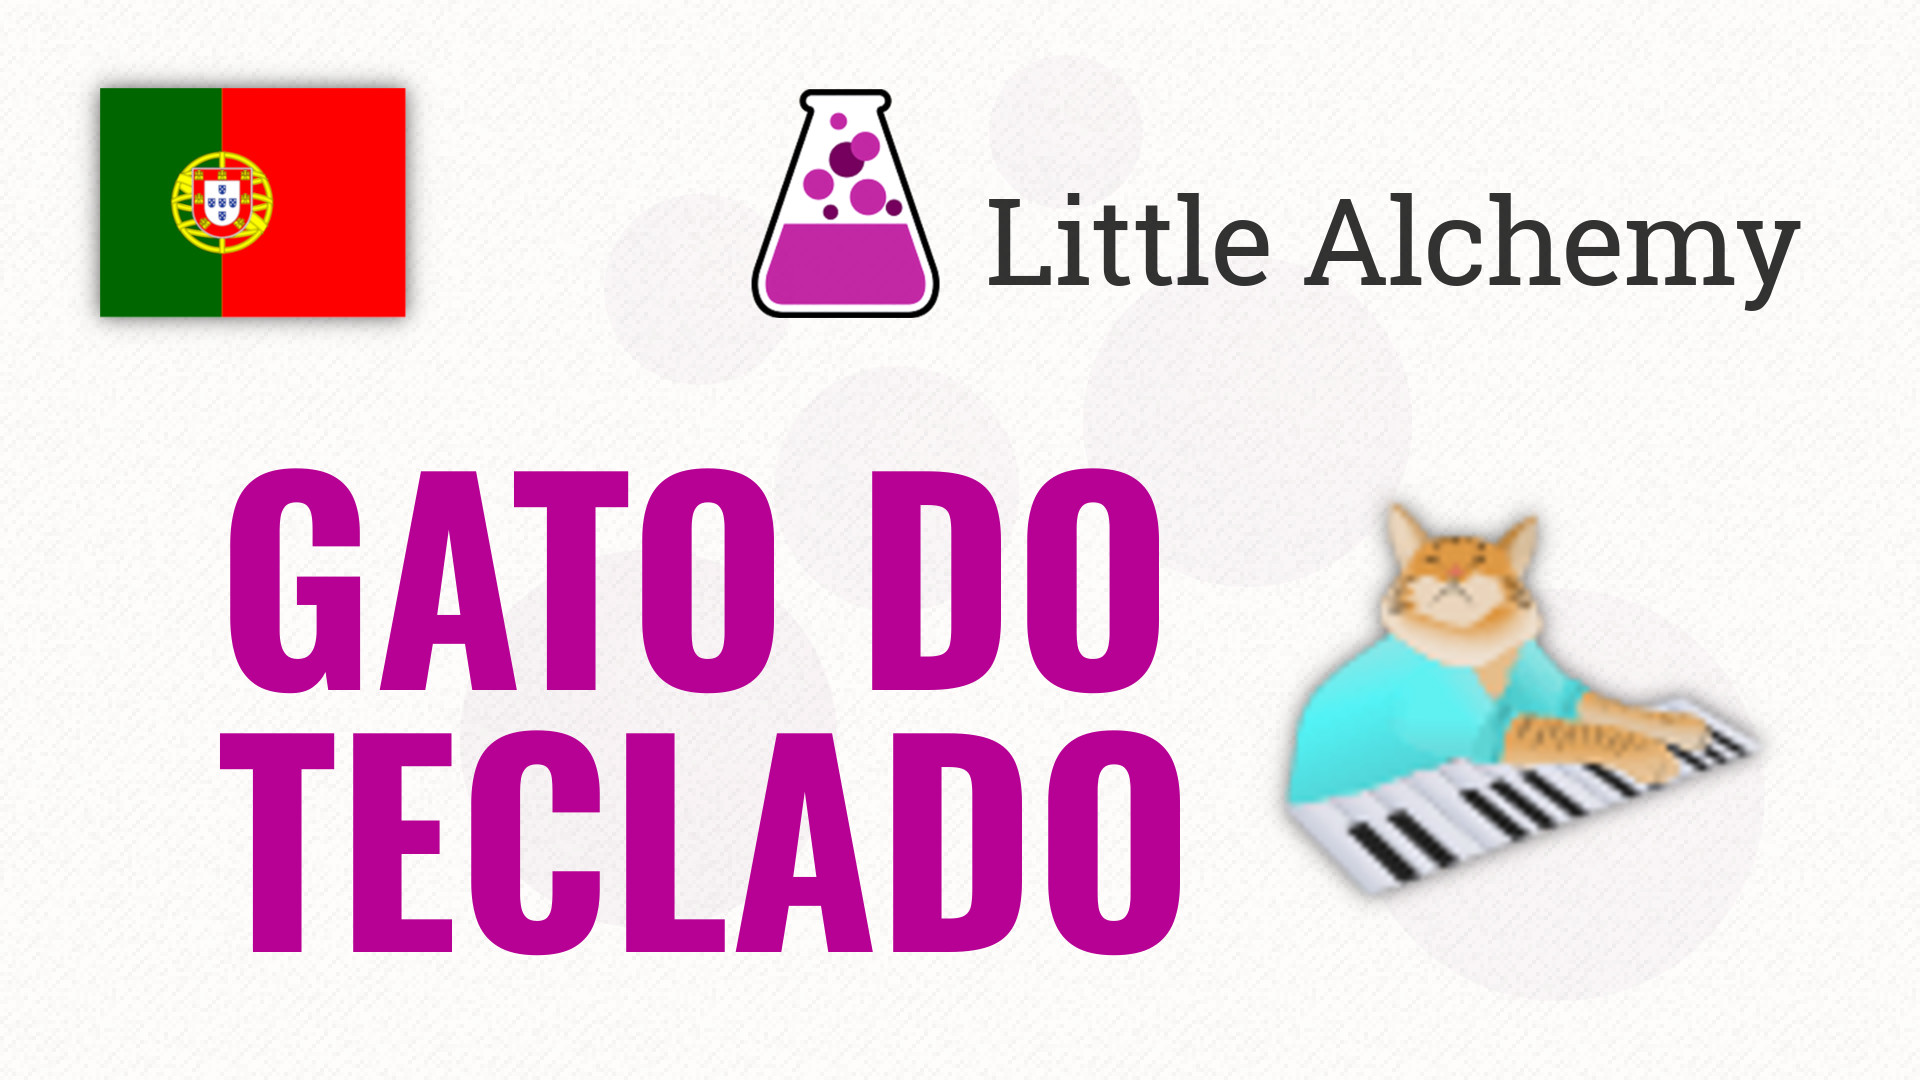 gato do teclado - Little Alchemy Solução